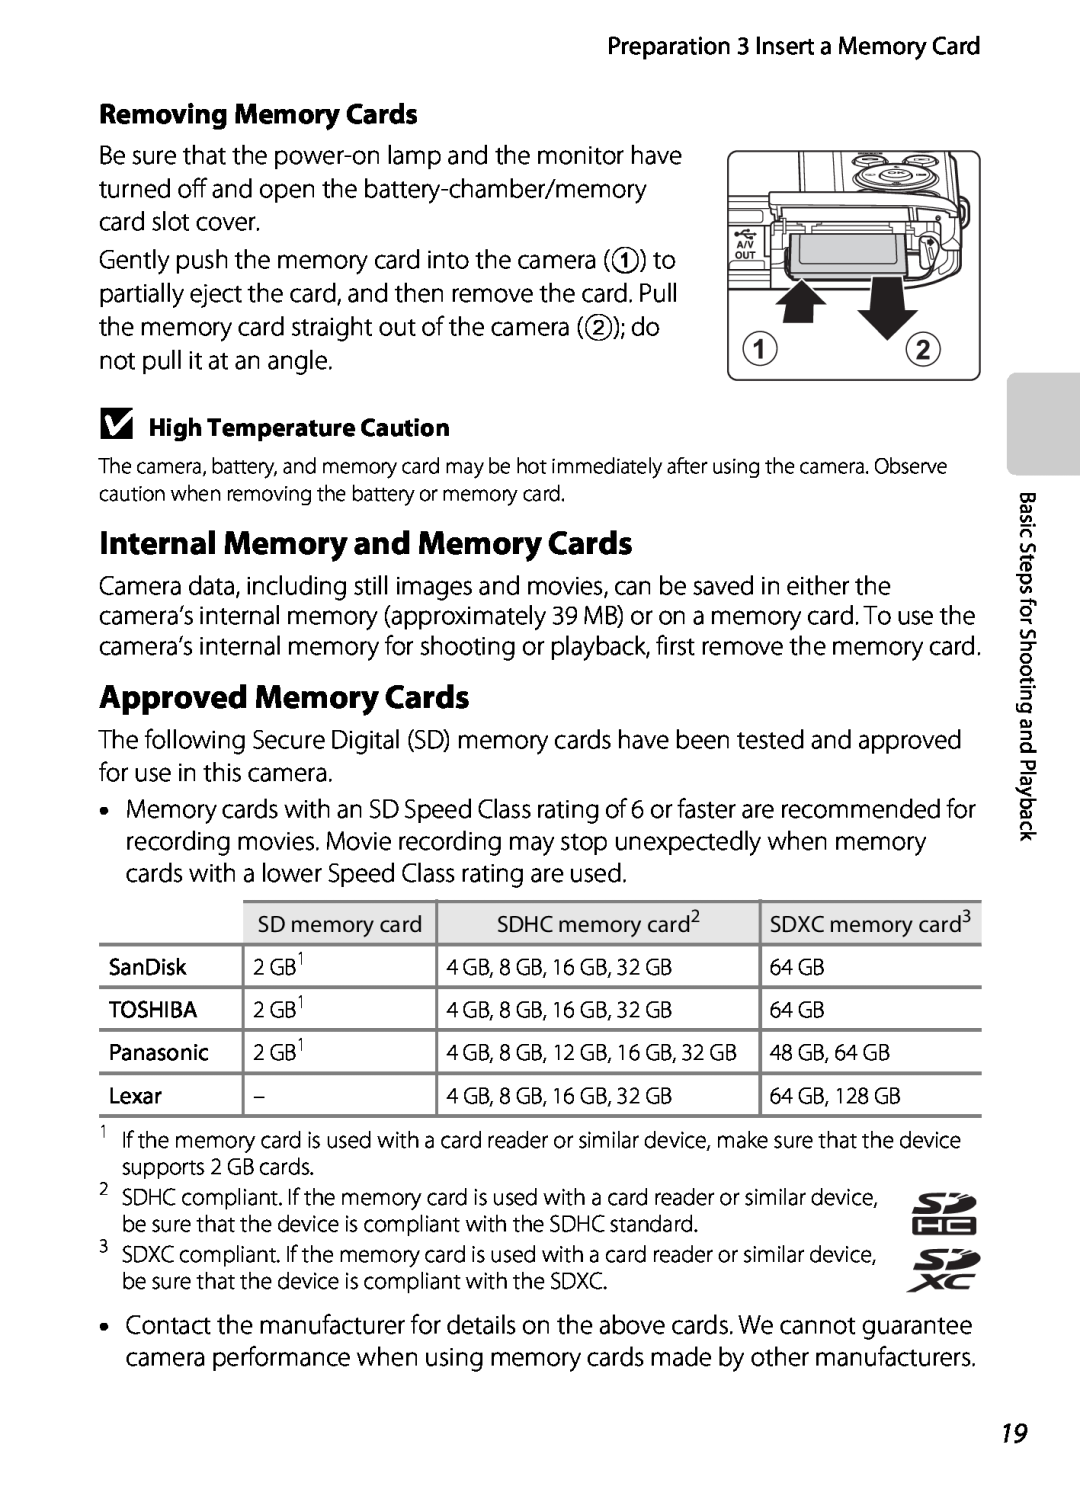 Nikon S2600 Internal Memory and Memory Cards, Approved Memory Cards, Removing Memory Cards, B High Temperature Caution 